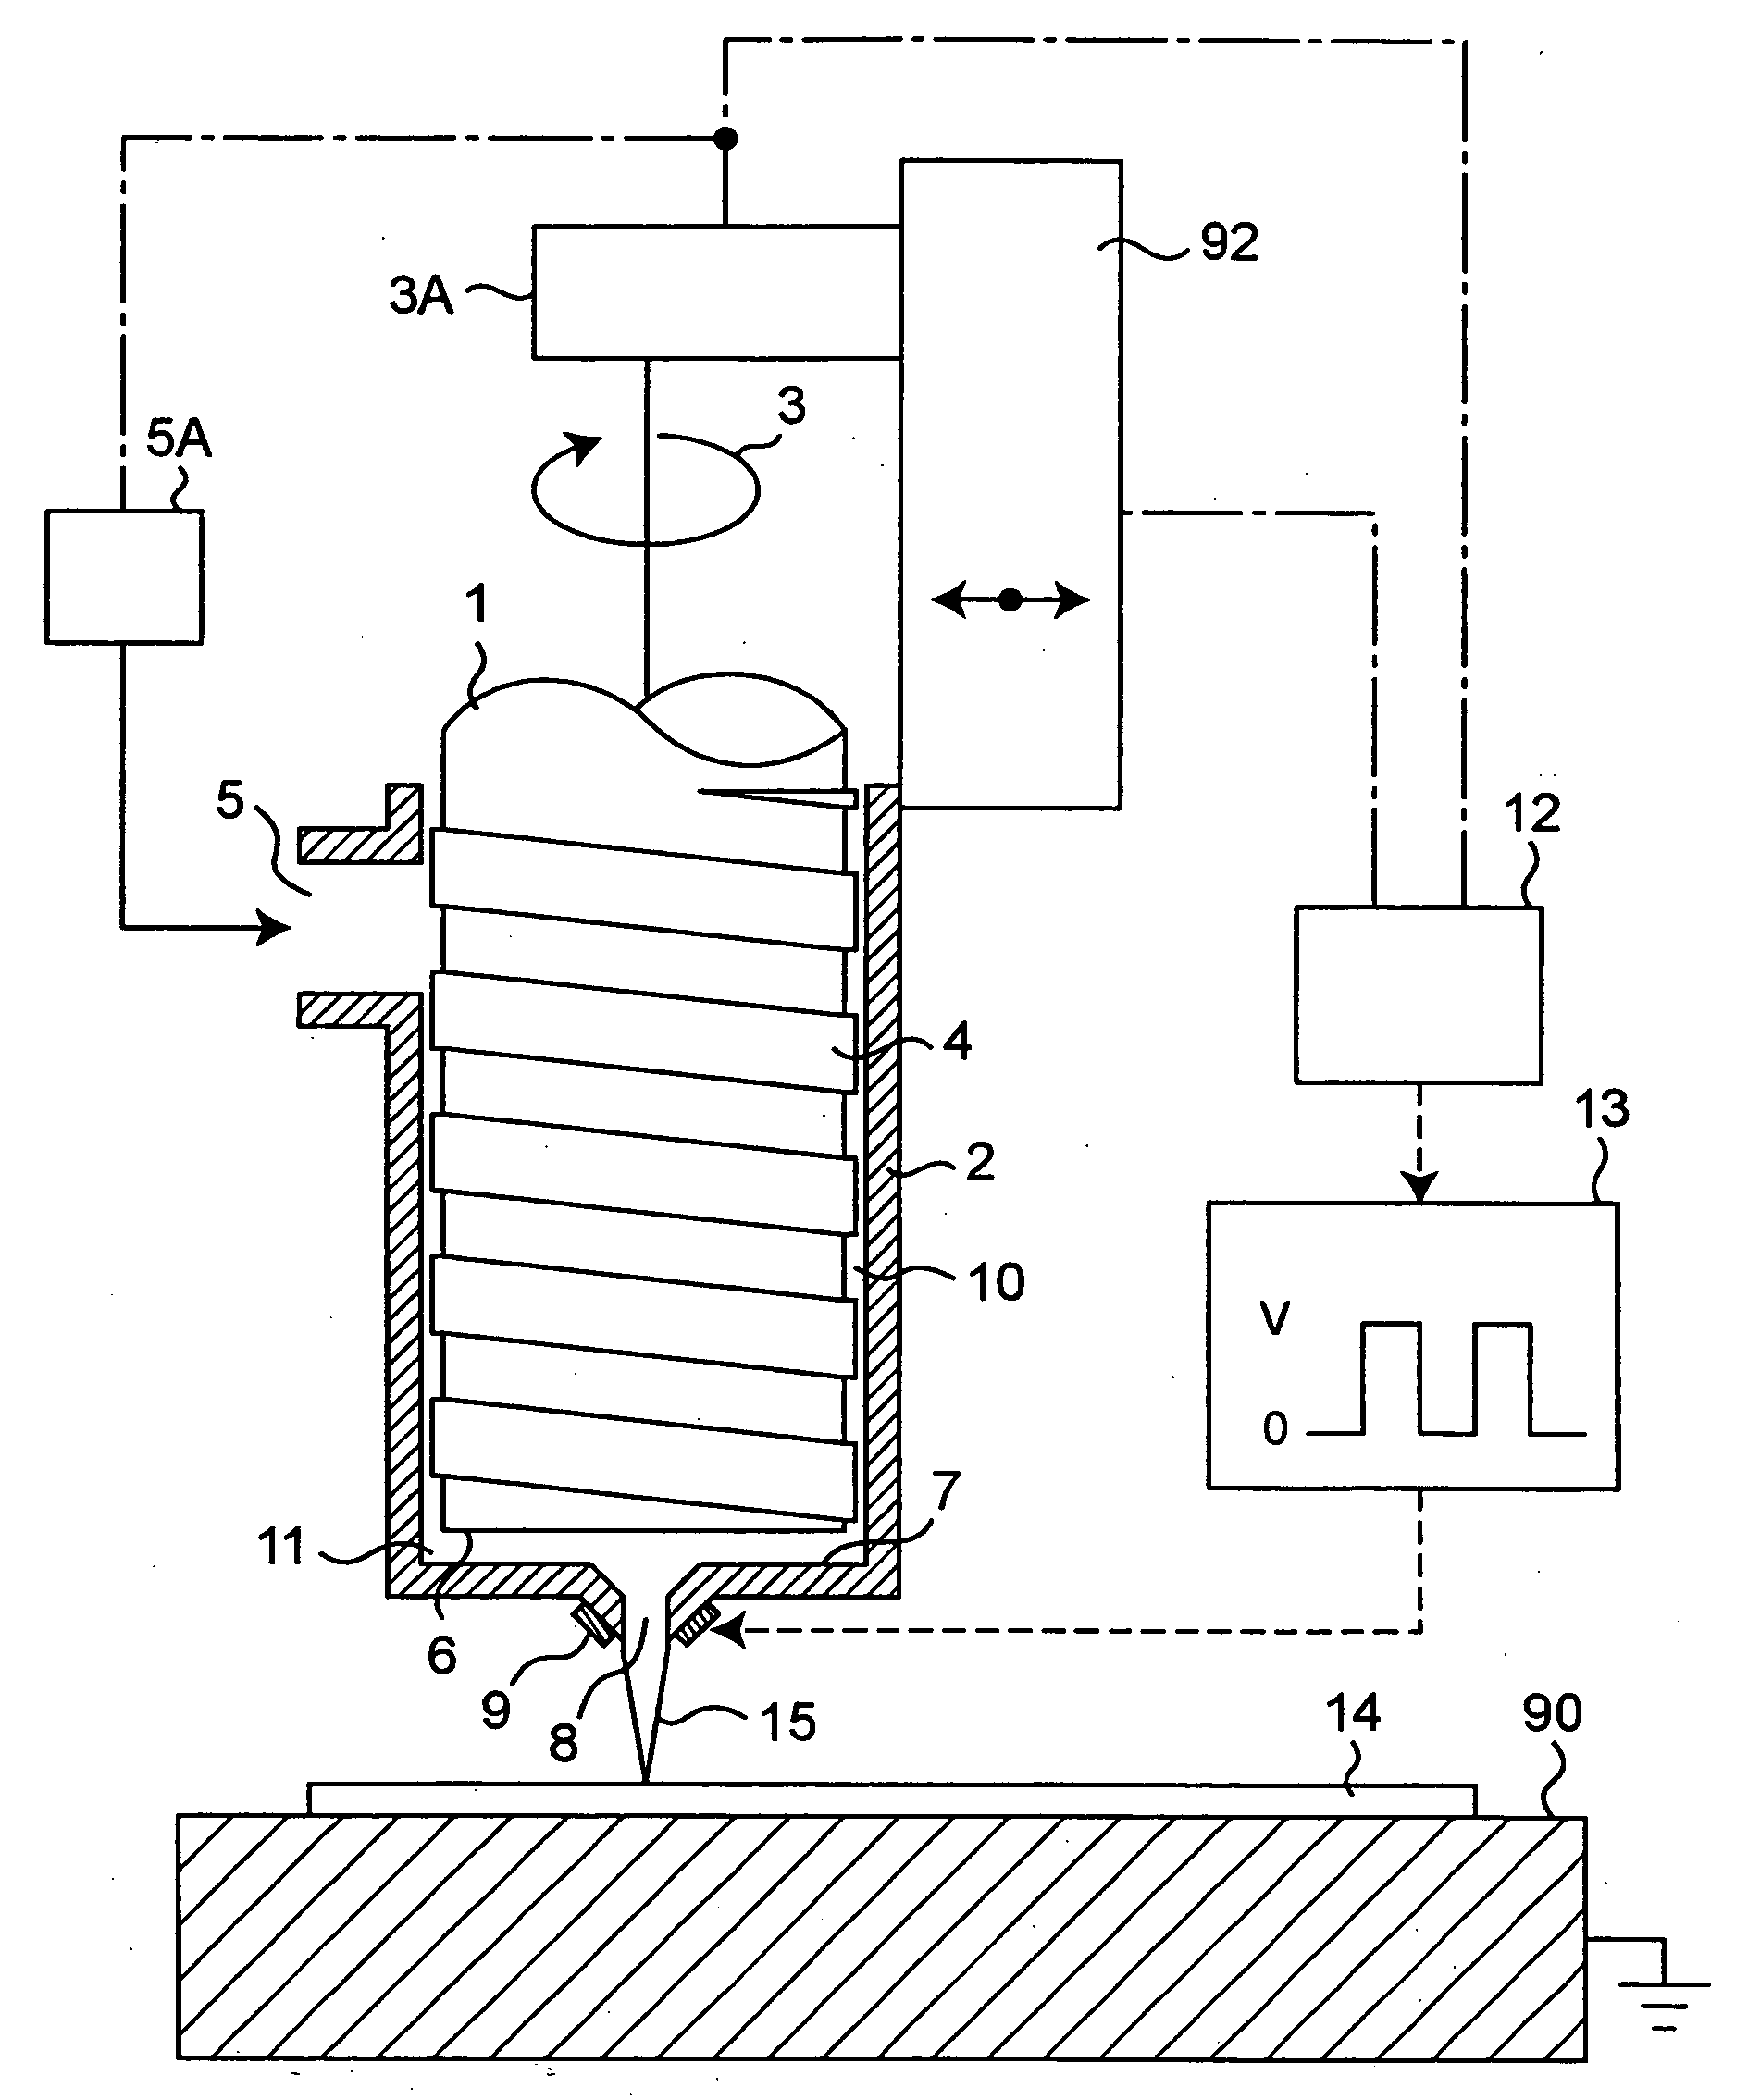 Fluid applying apparatus and method, and plasma display panel